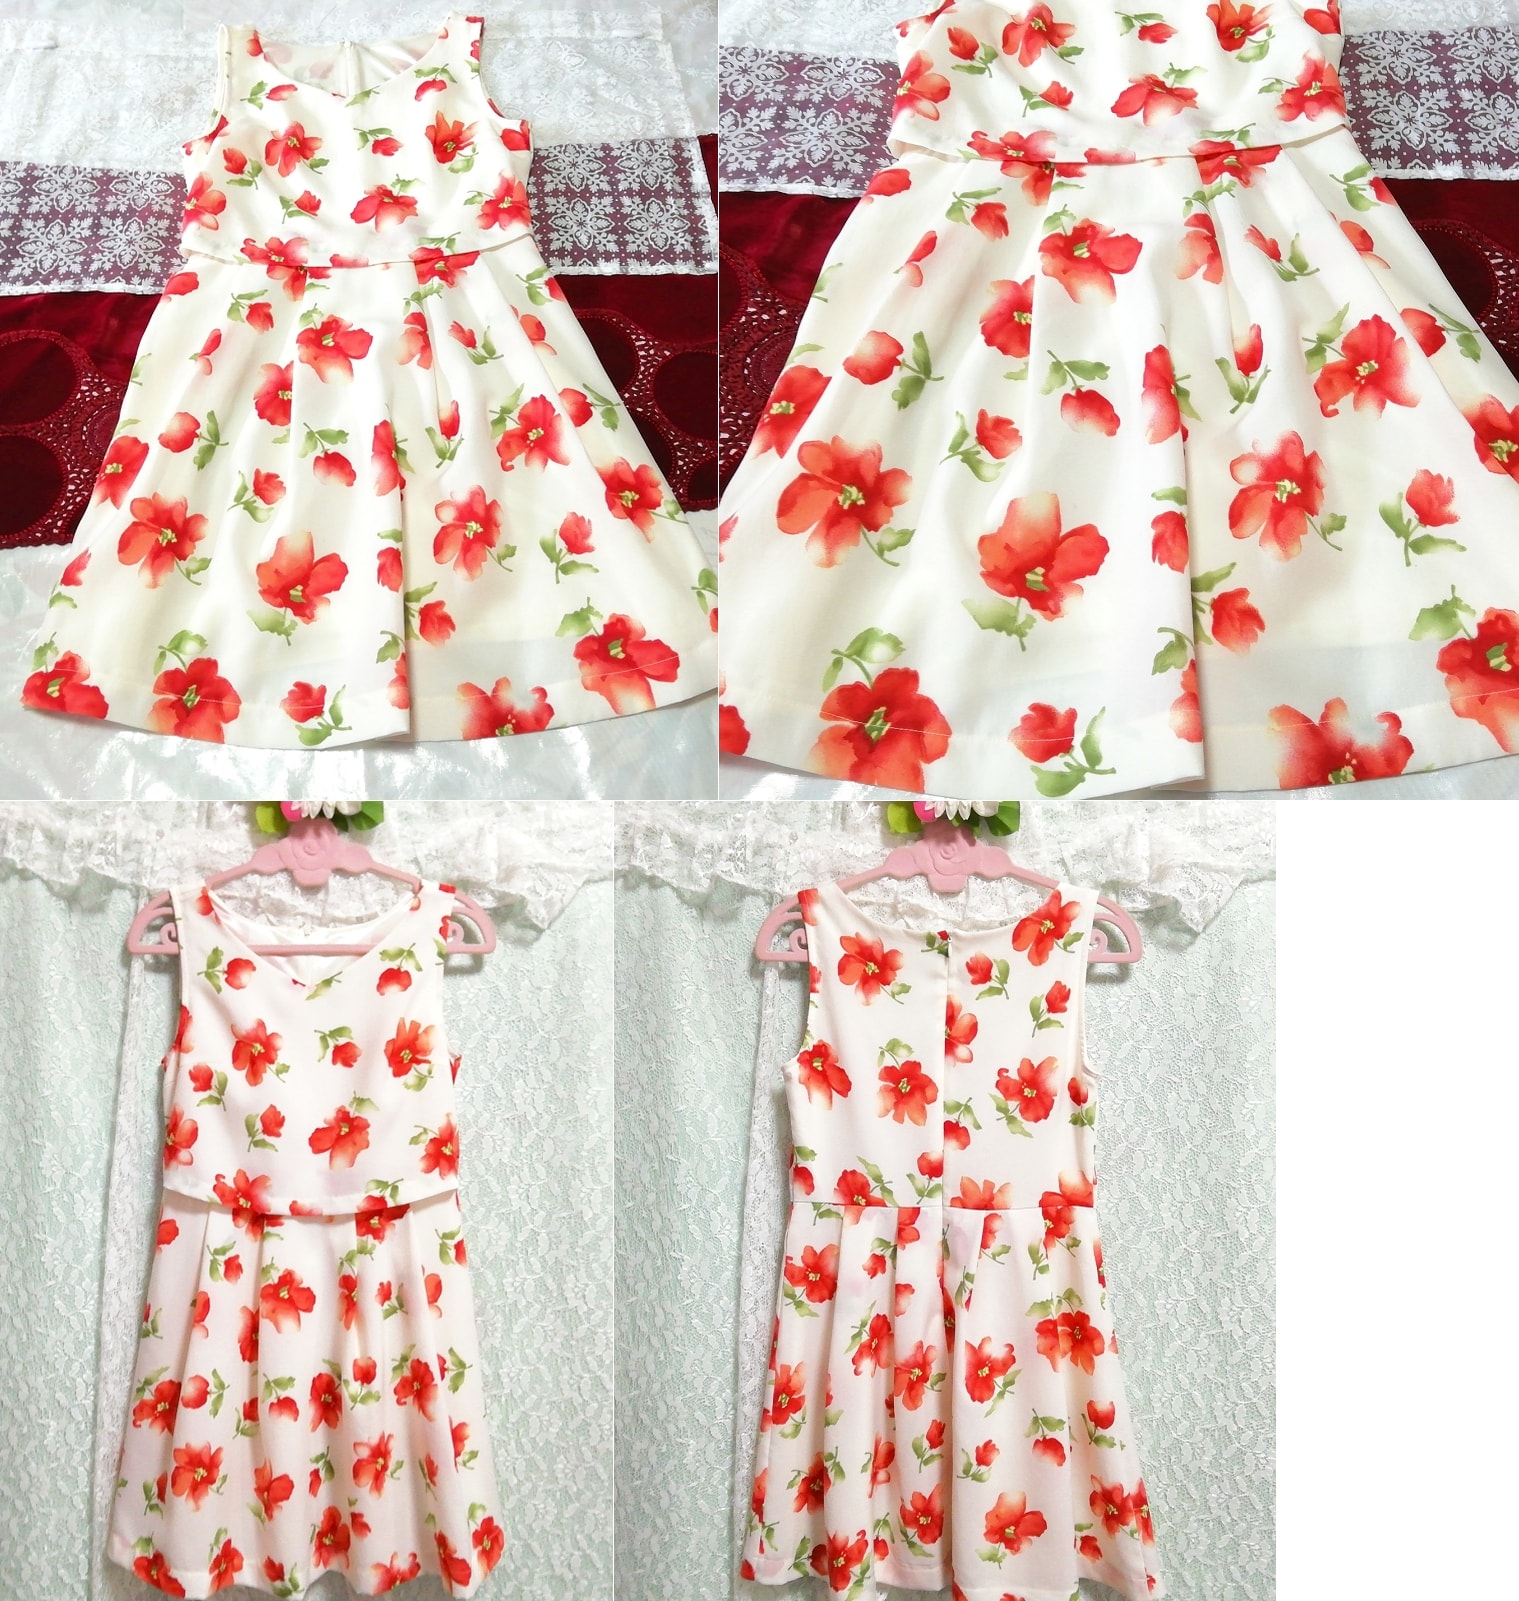 White red green floral pattern chiffon sleeveless negligee nightgown nightwear mini dress, mini skirt, m size